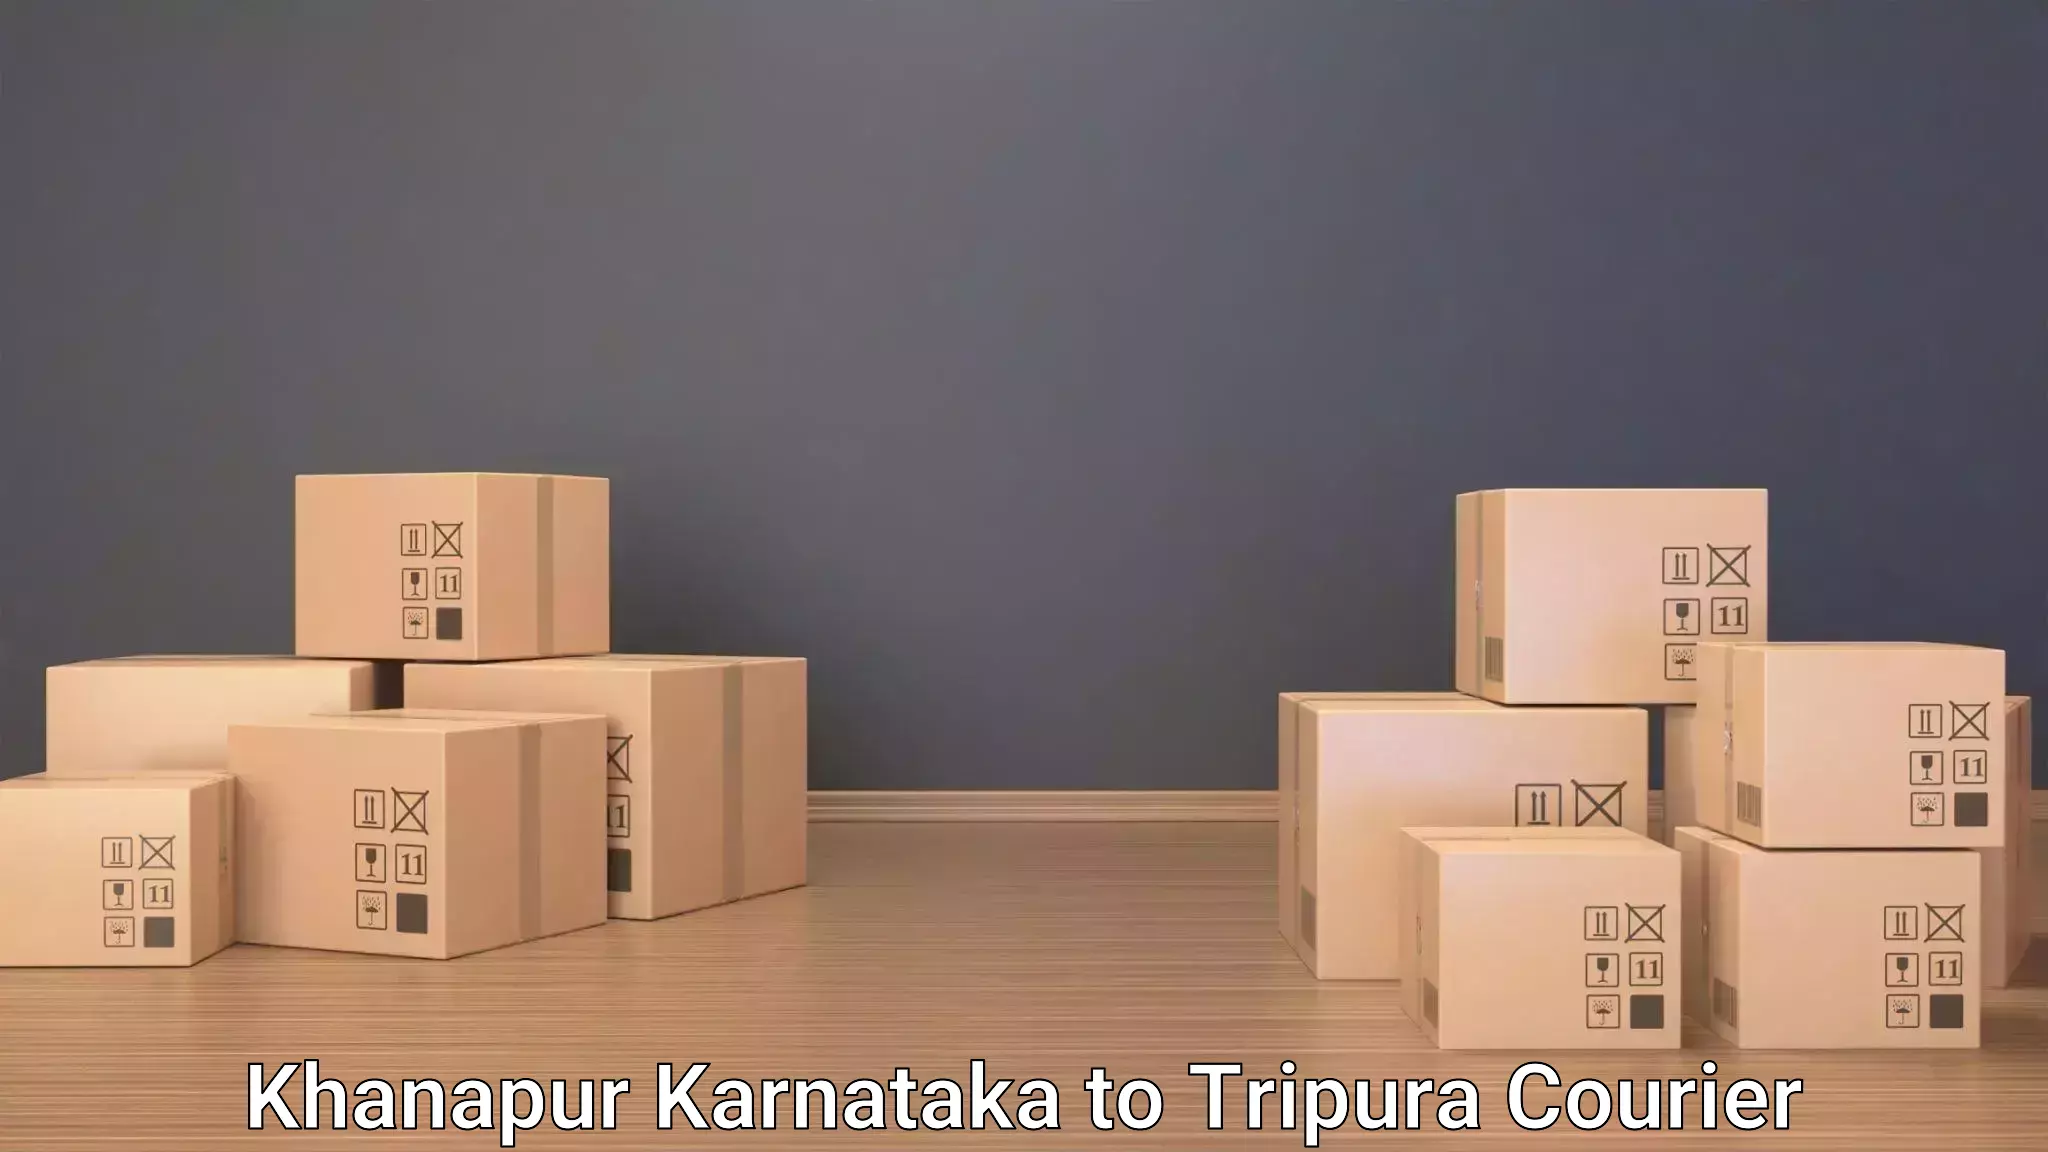 International baggage delivery Khanapur Karnataka to Udaipur Tripura